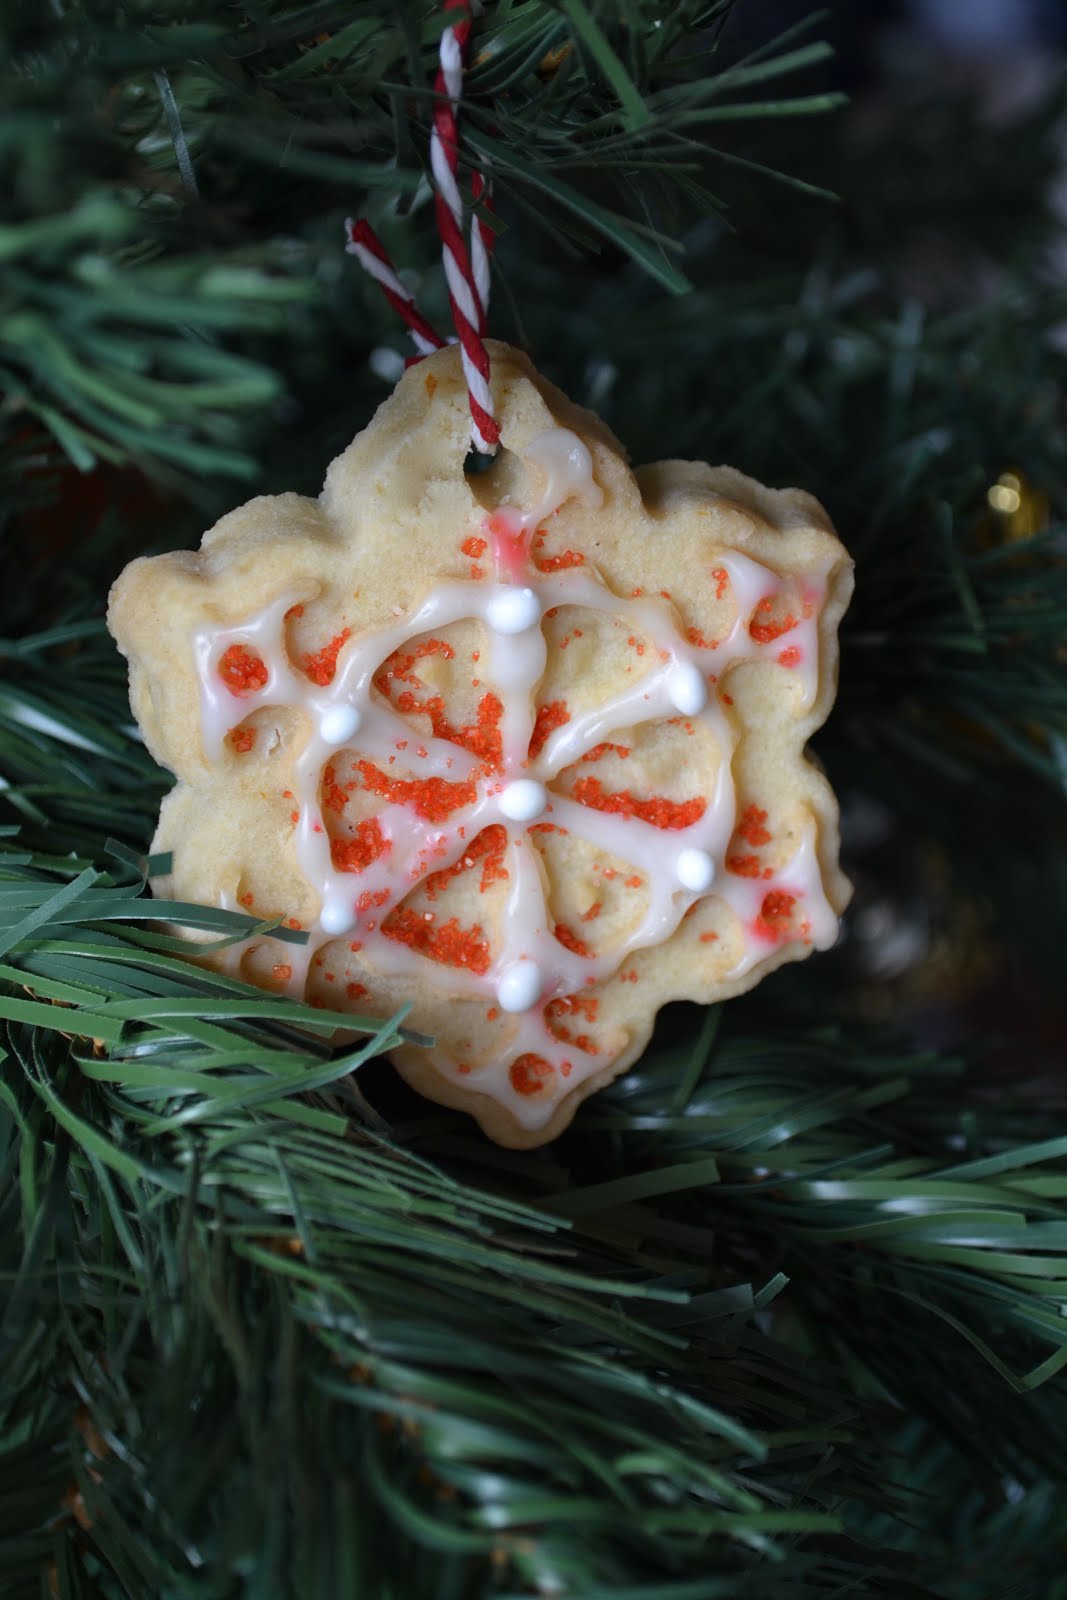 Biscotti Di Natale Per Decorare Lalbero.Cucina Di Barbara Food Blog Blog Di Cucina Ricette Ricetta Ferratelle Per Decorare L Albero Di Natale